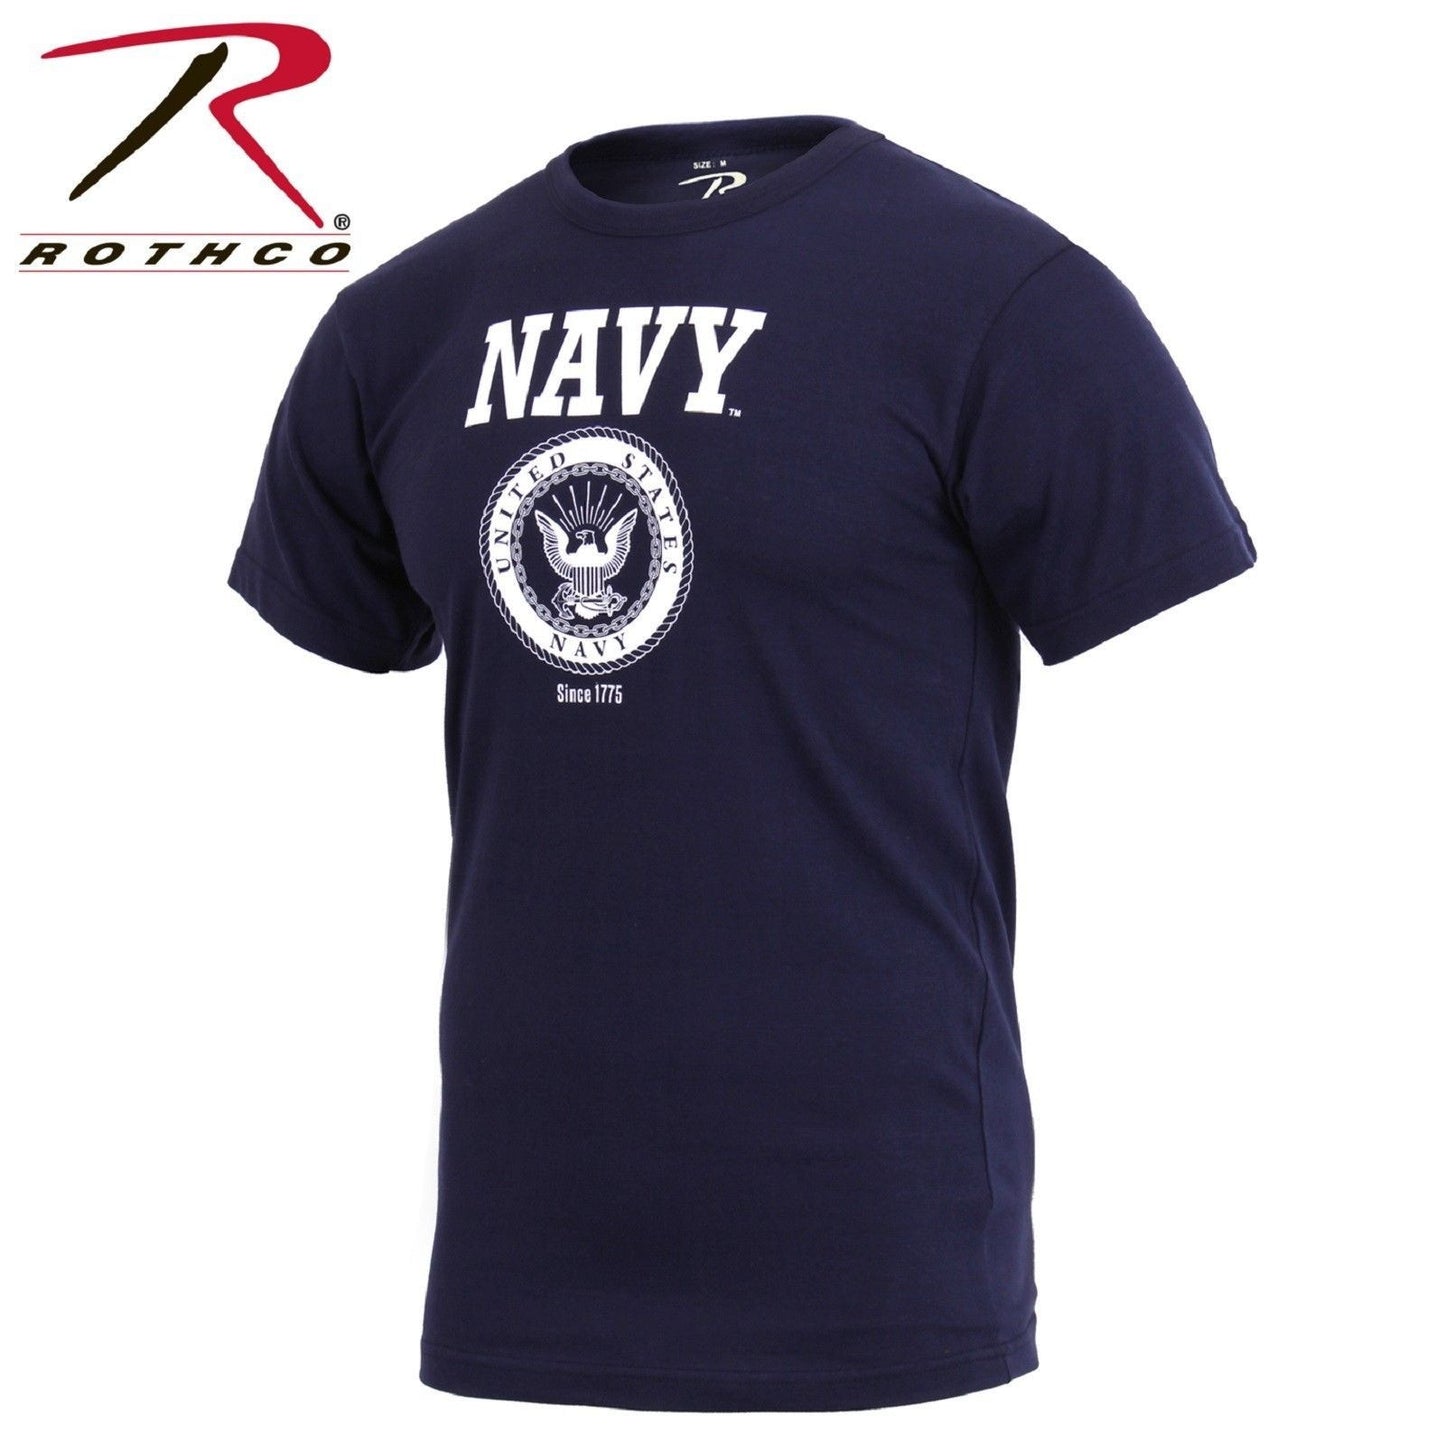 Mens USA Navy Emblem Tee Shirt - Rothco Dark Blue US NAVY TShirts